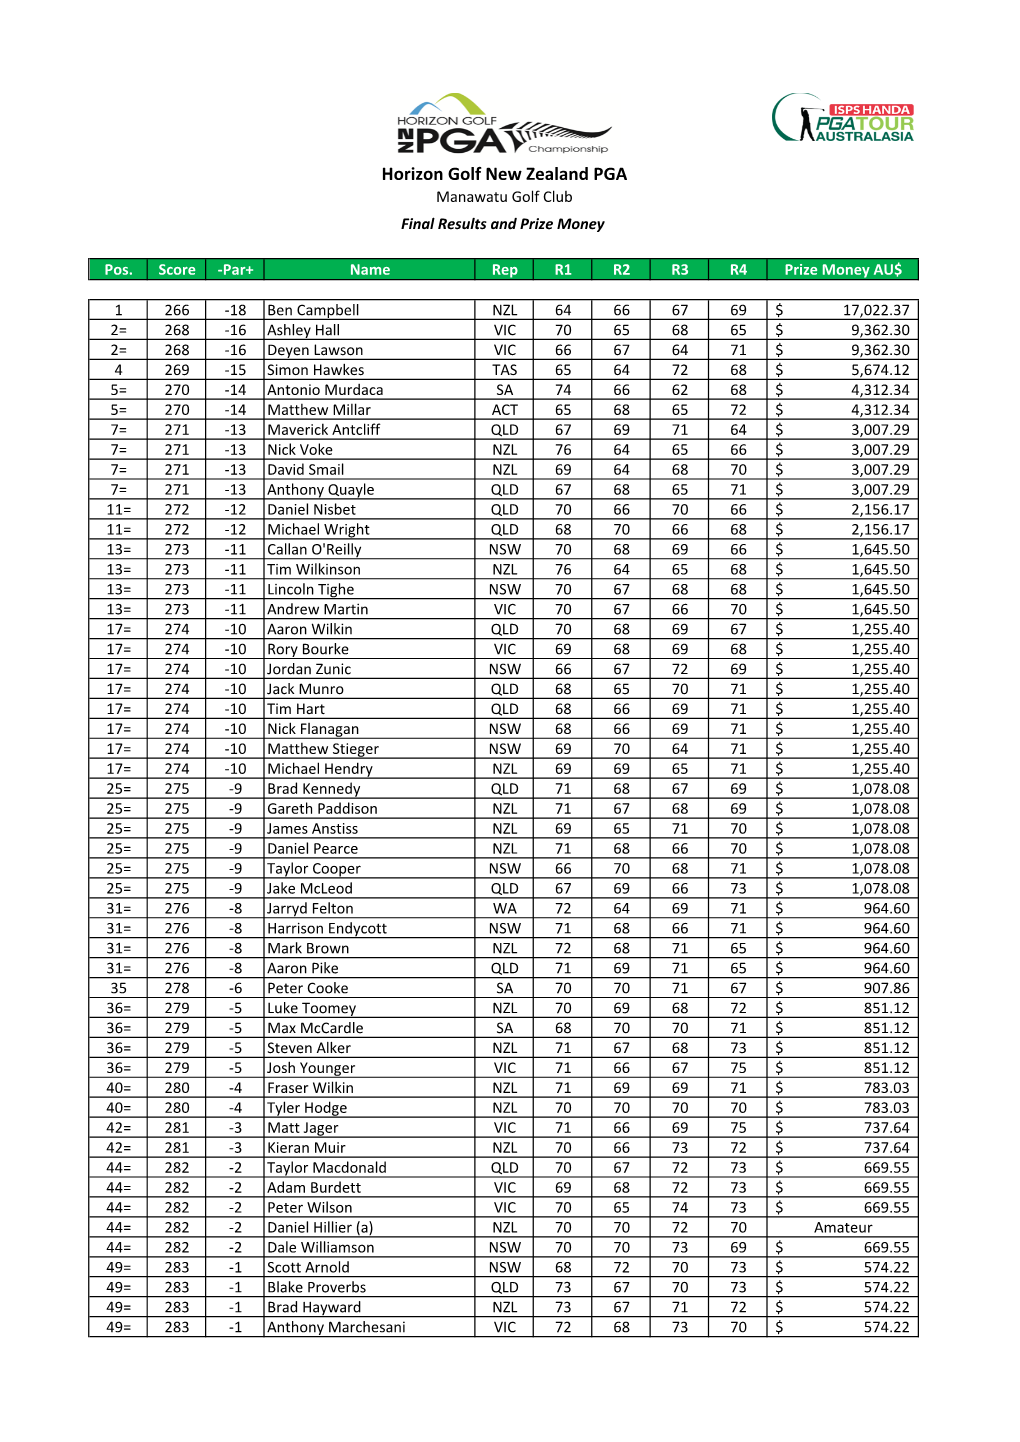 Horizon Golf New Zealand PGA Manawatu Golf Club Final Results and Prize Money